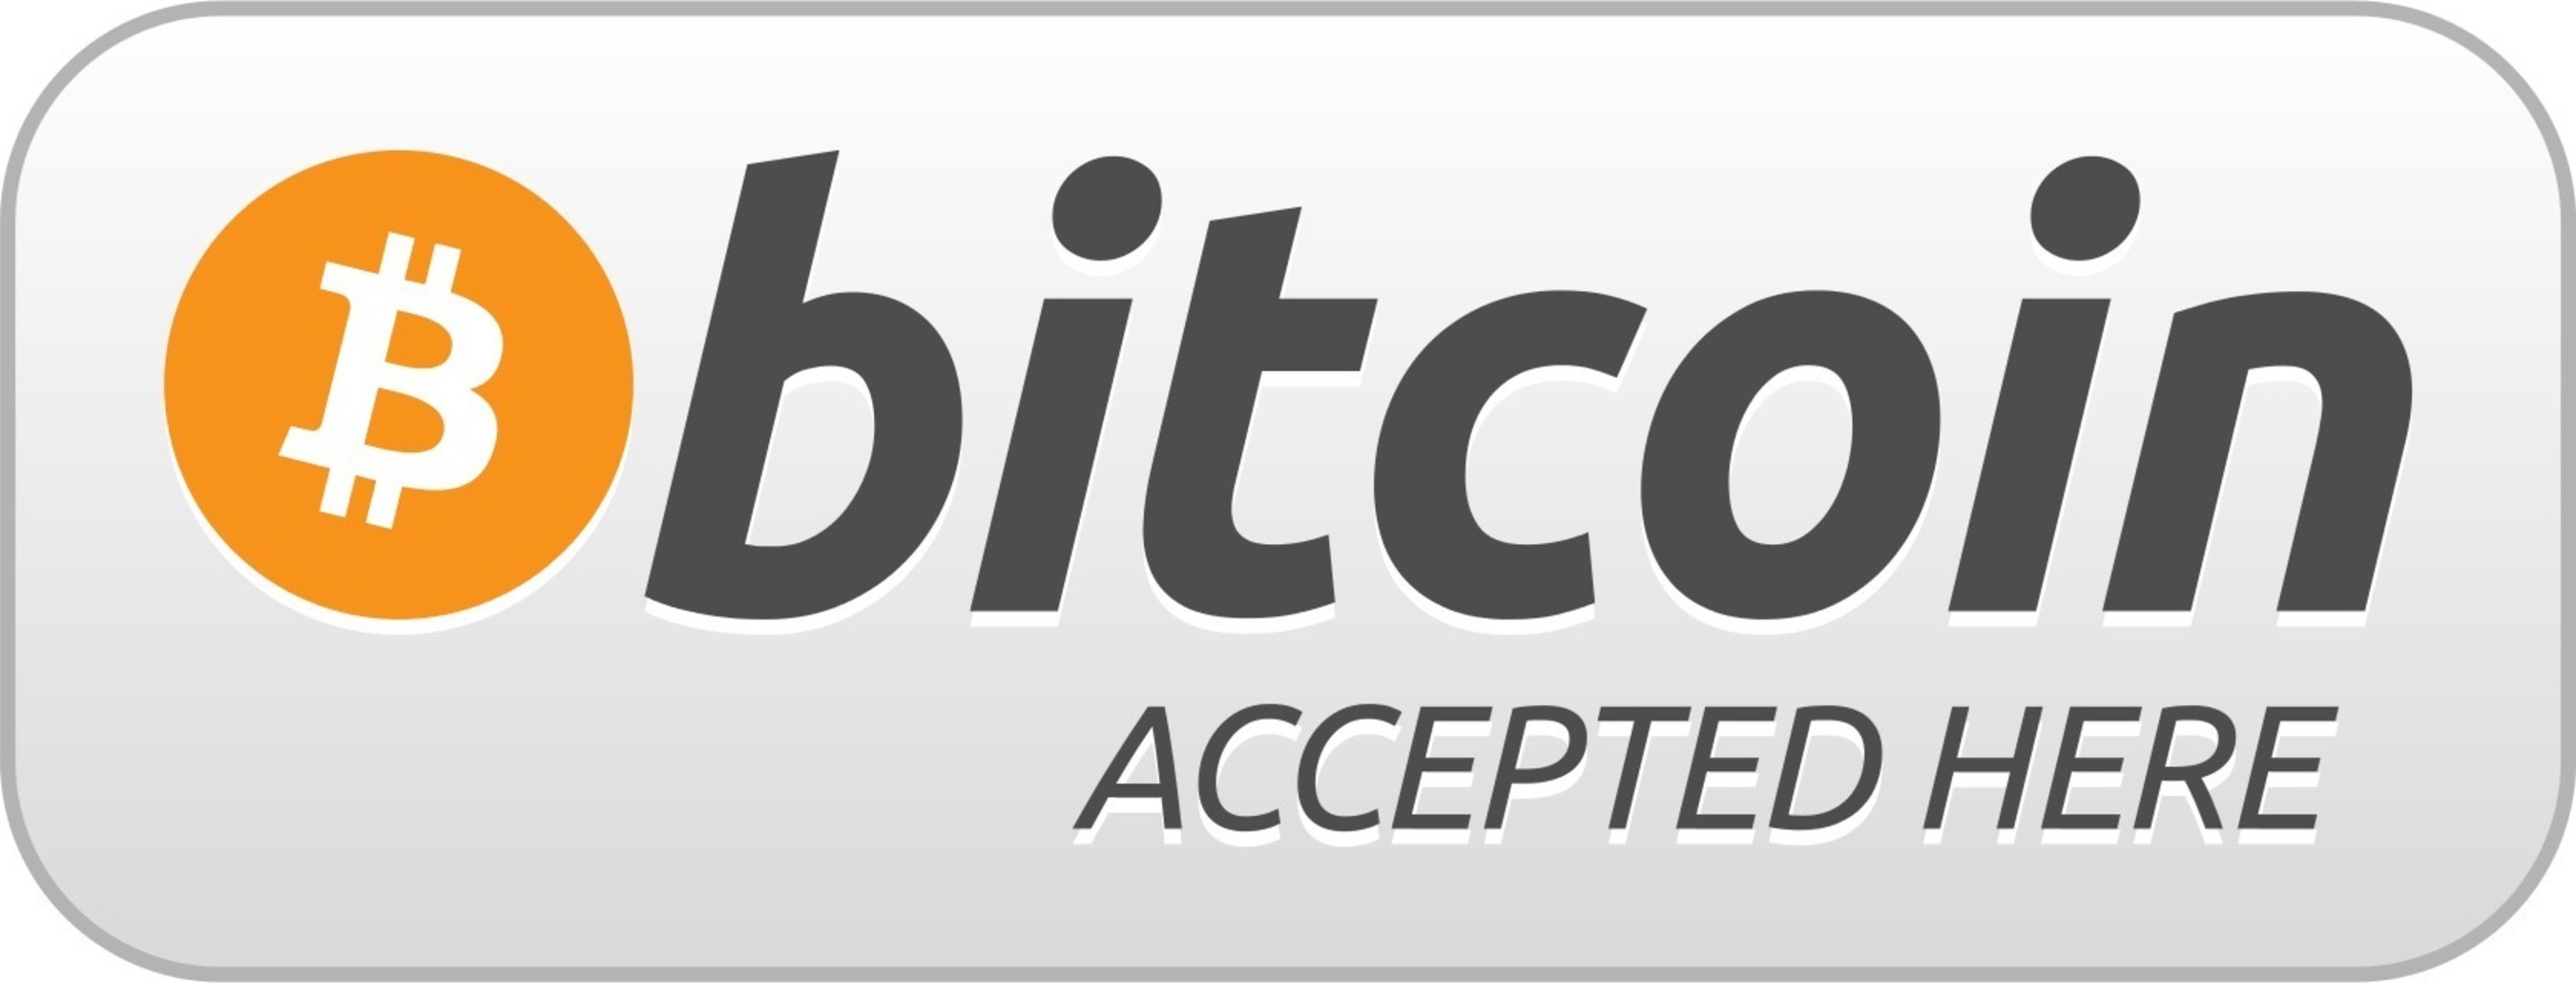 Bitcoin - logo (PRNewsFoto/Spector & Associates)